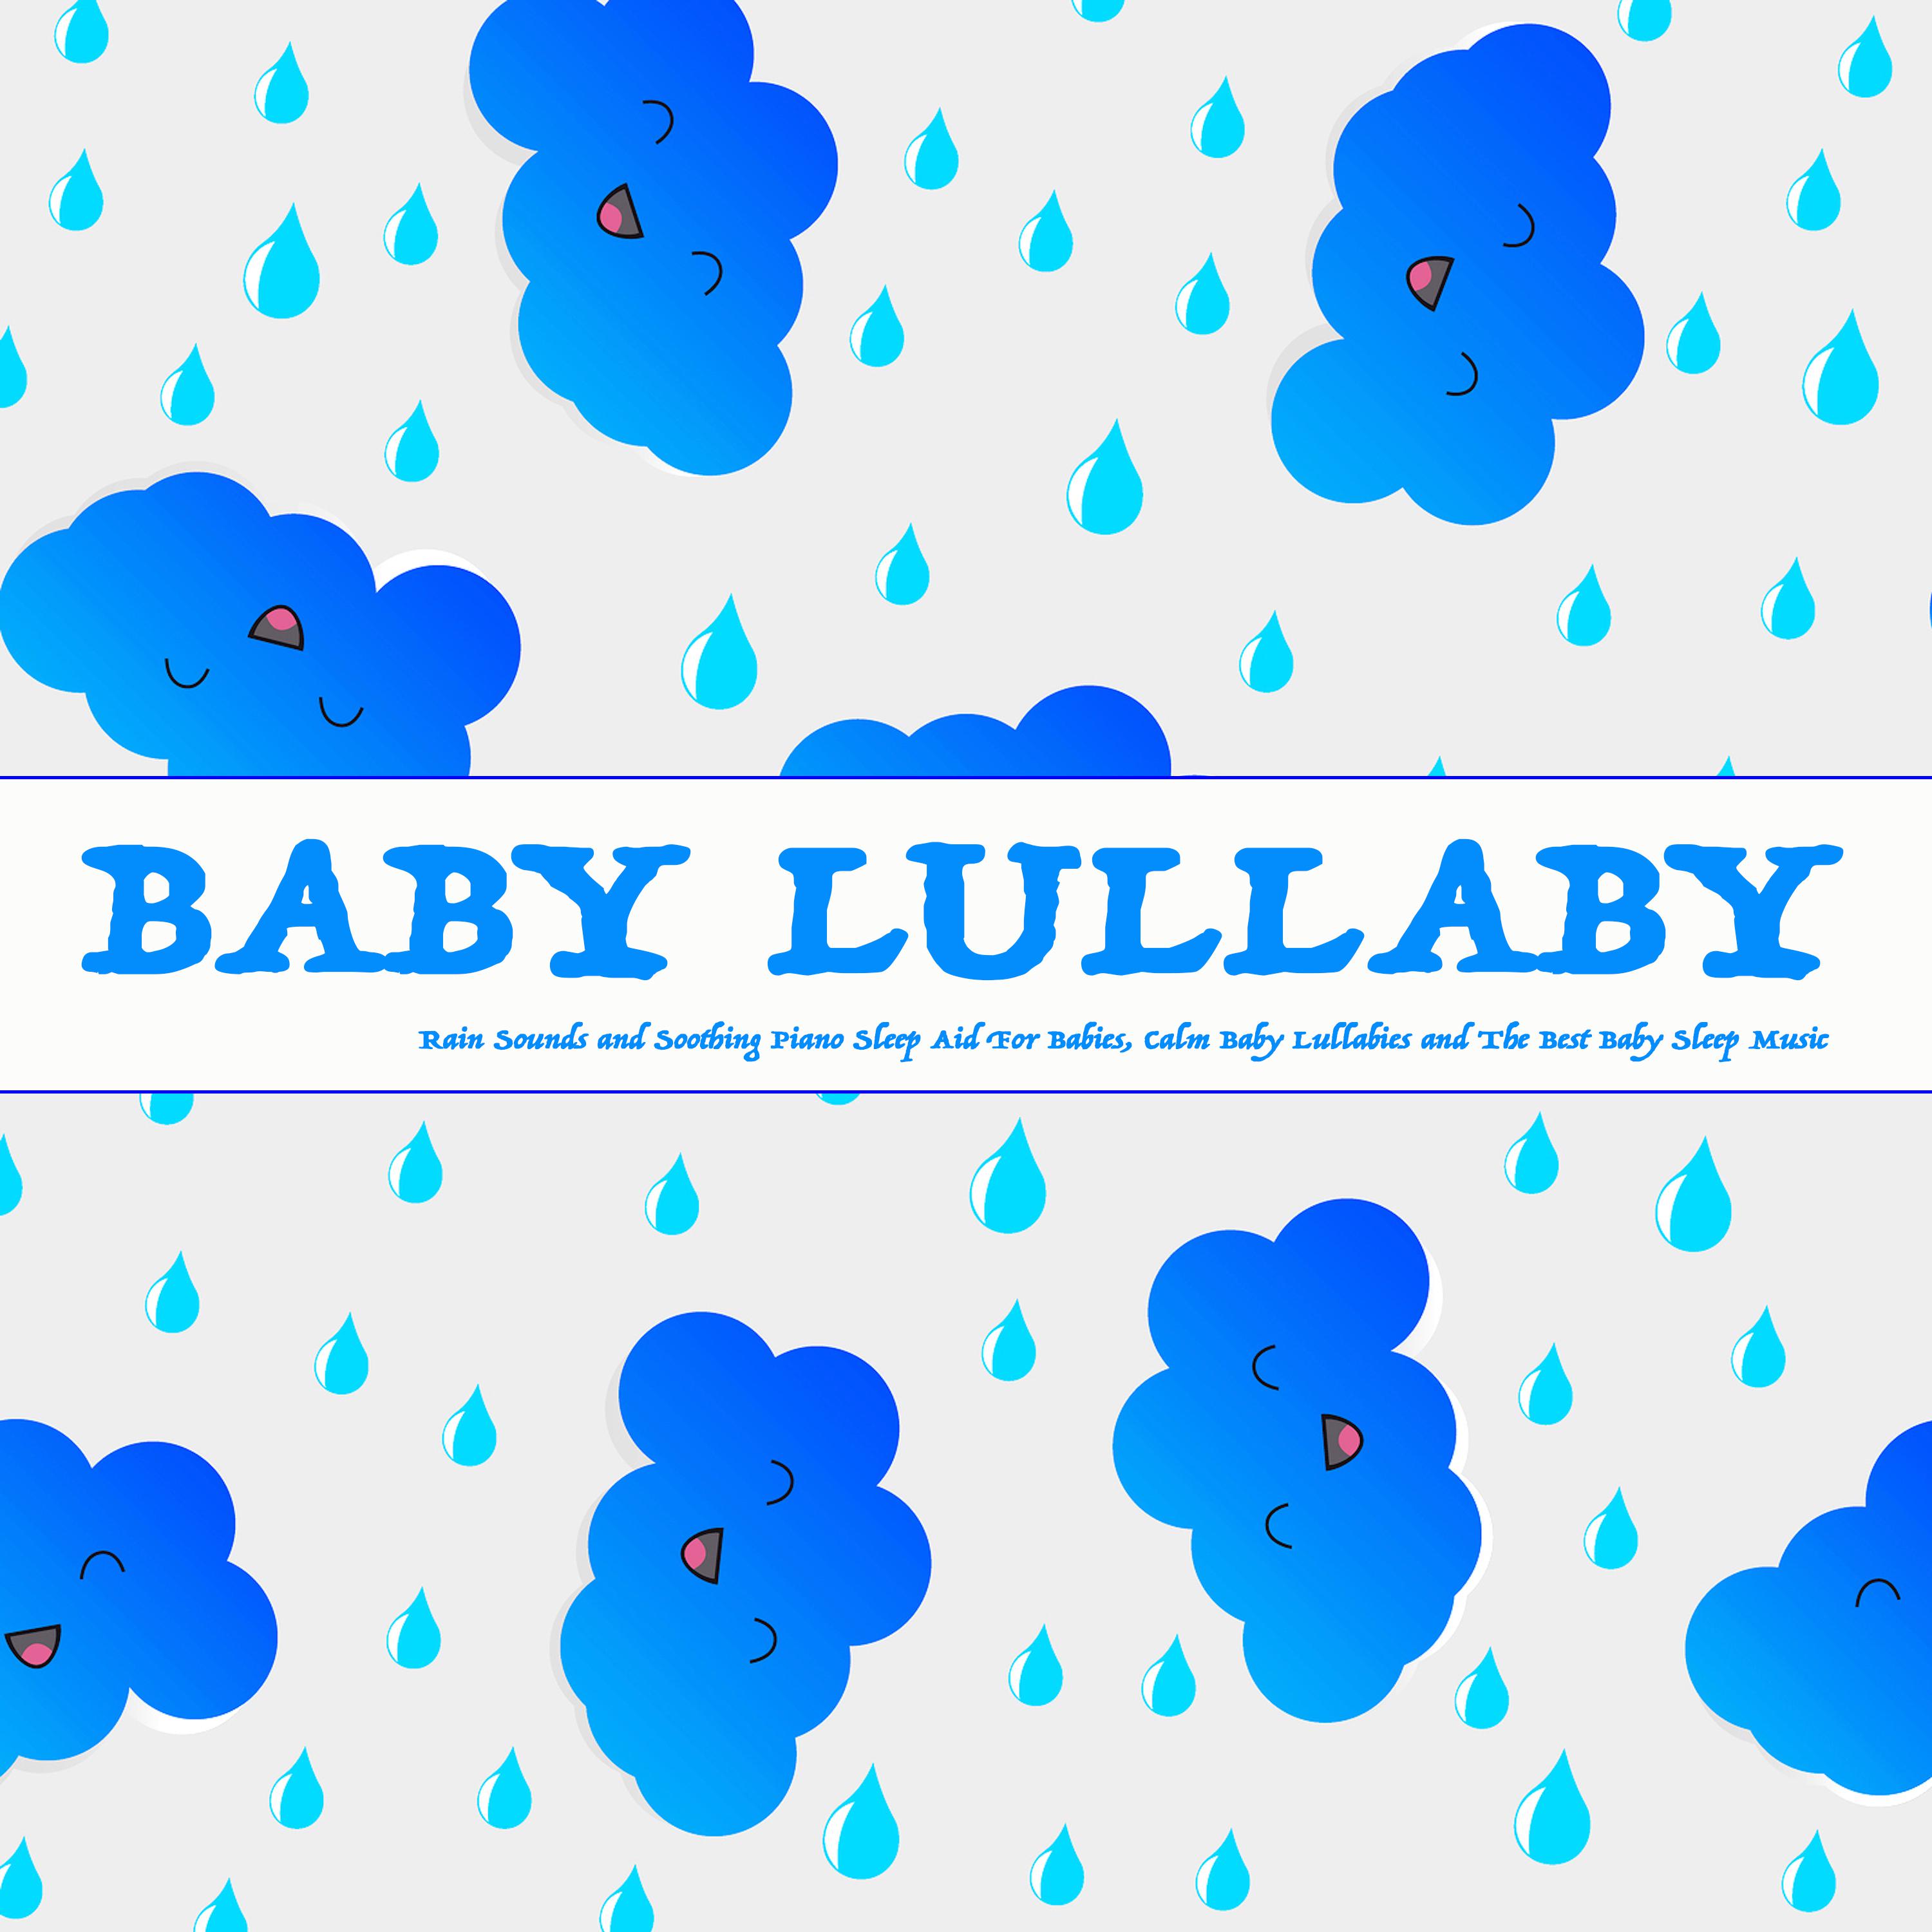 Baby Lullabies with Calm Rain Sounds